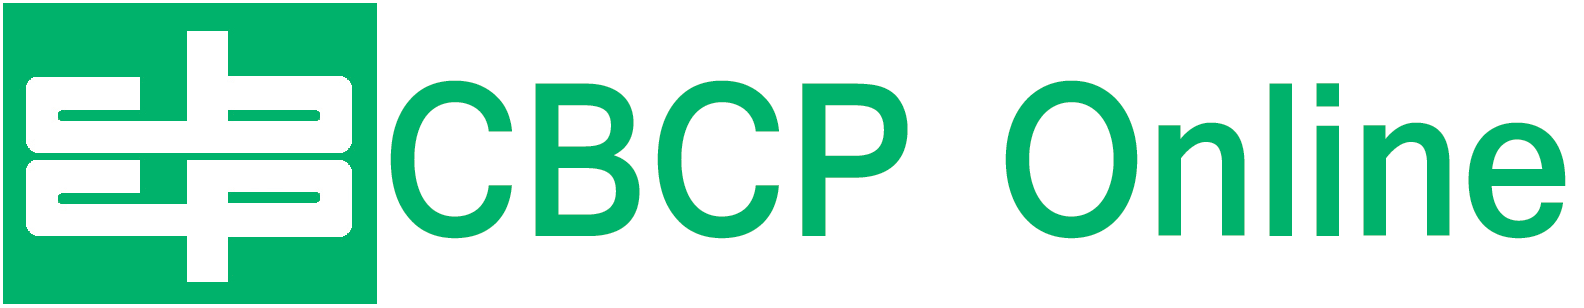 CBCP Online